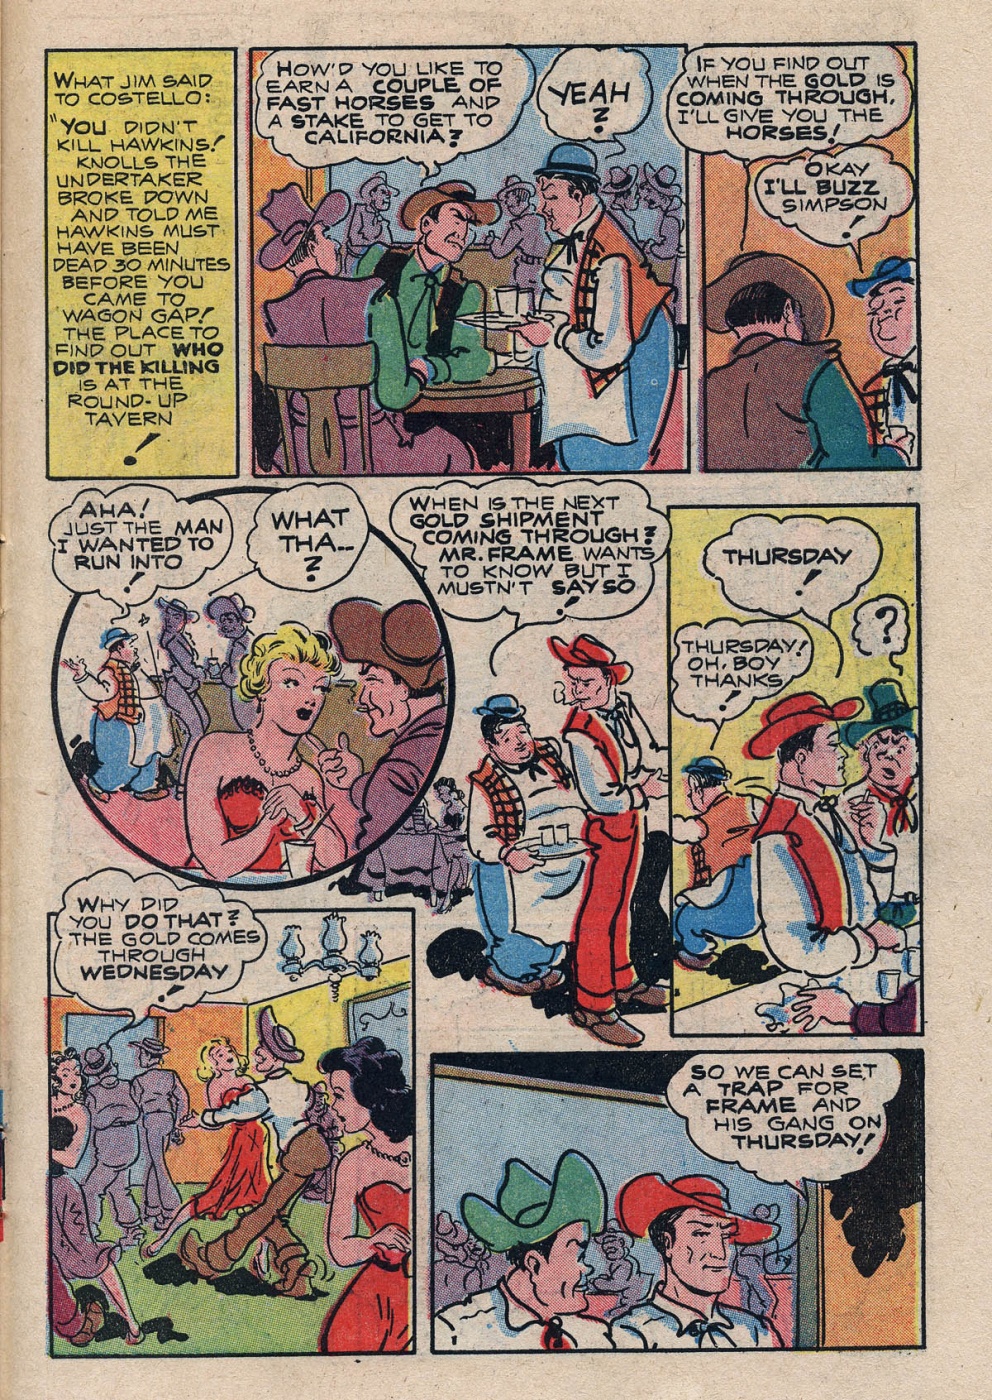 Funny Comic Strips - Abbott and Costello 001 (Feb 1948) 27